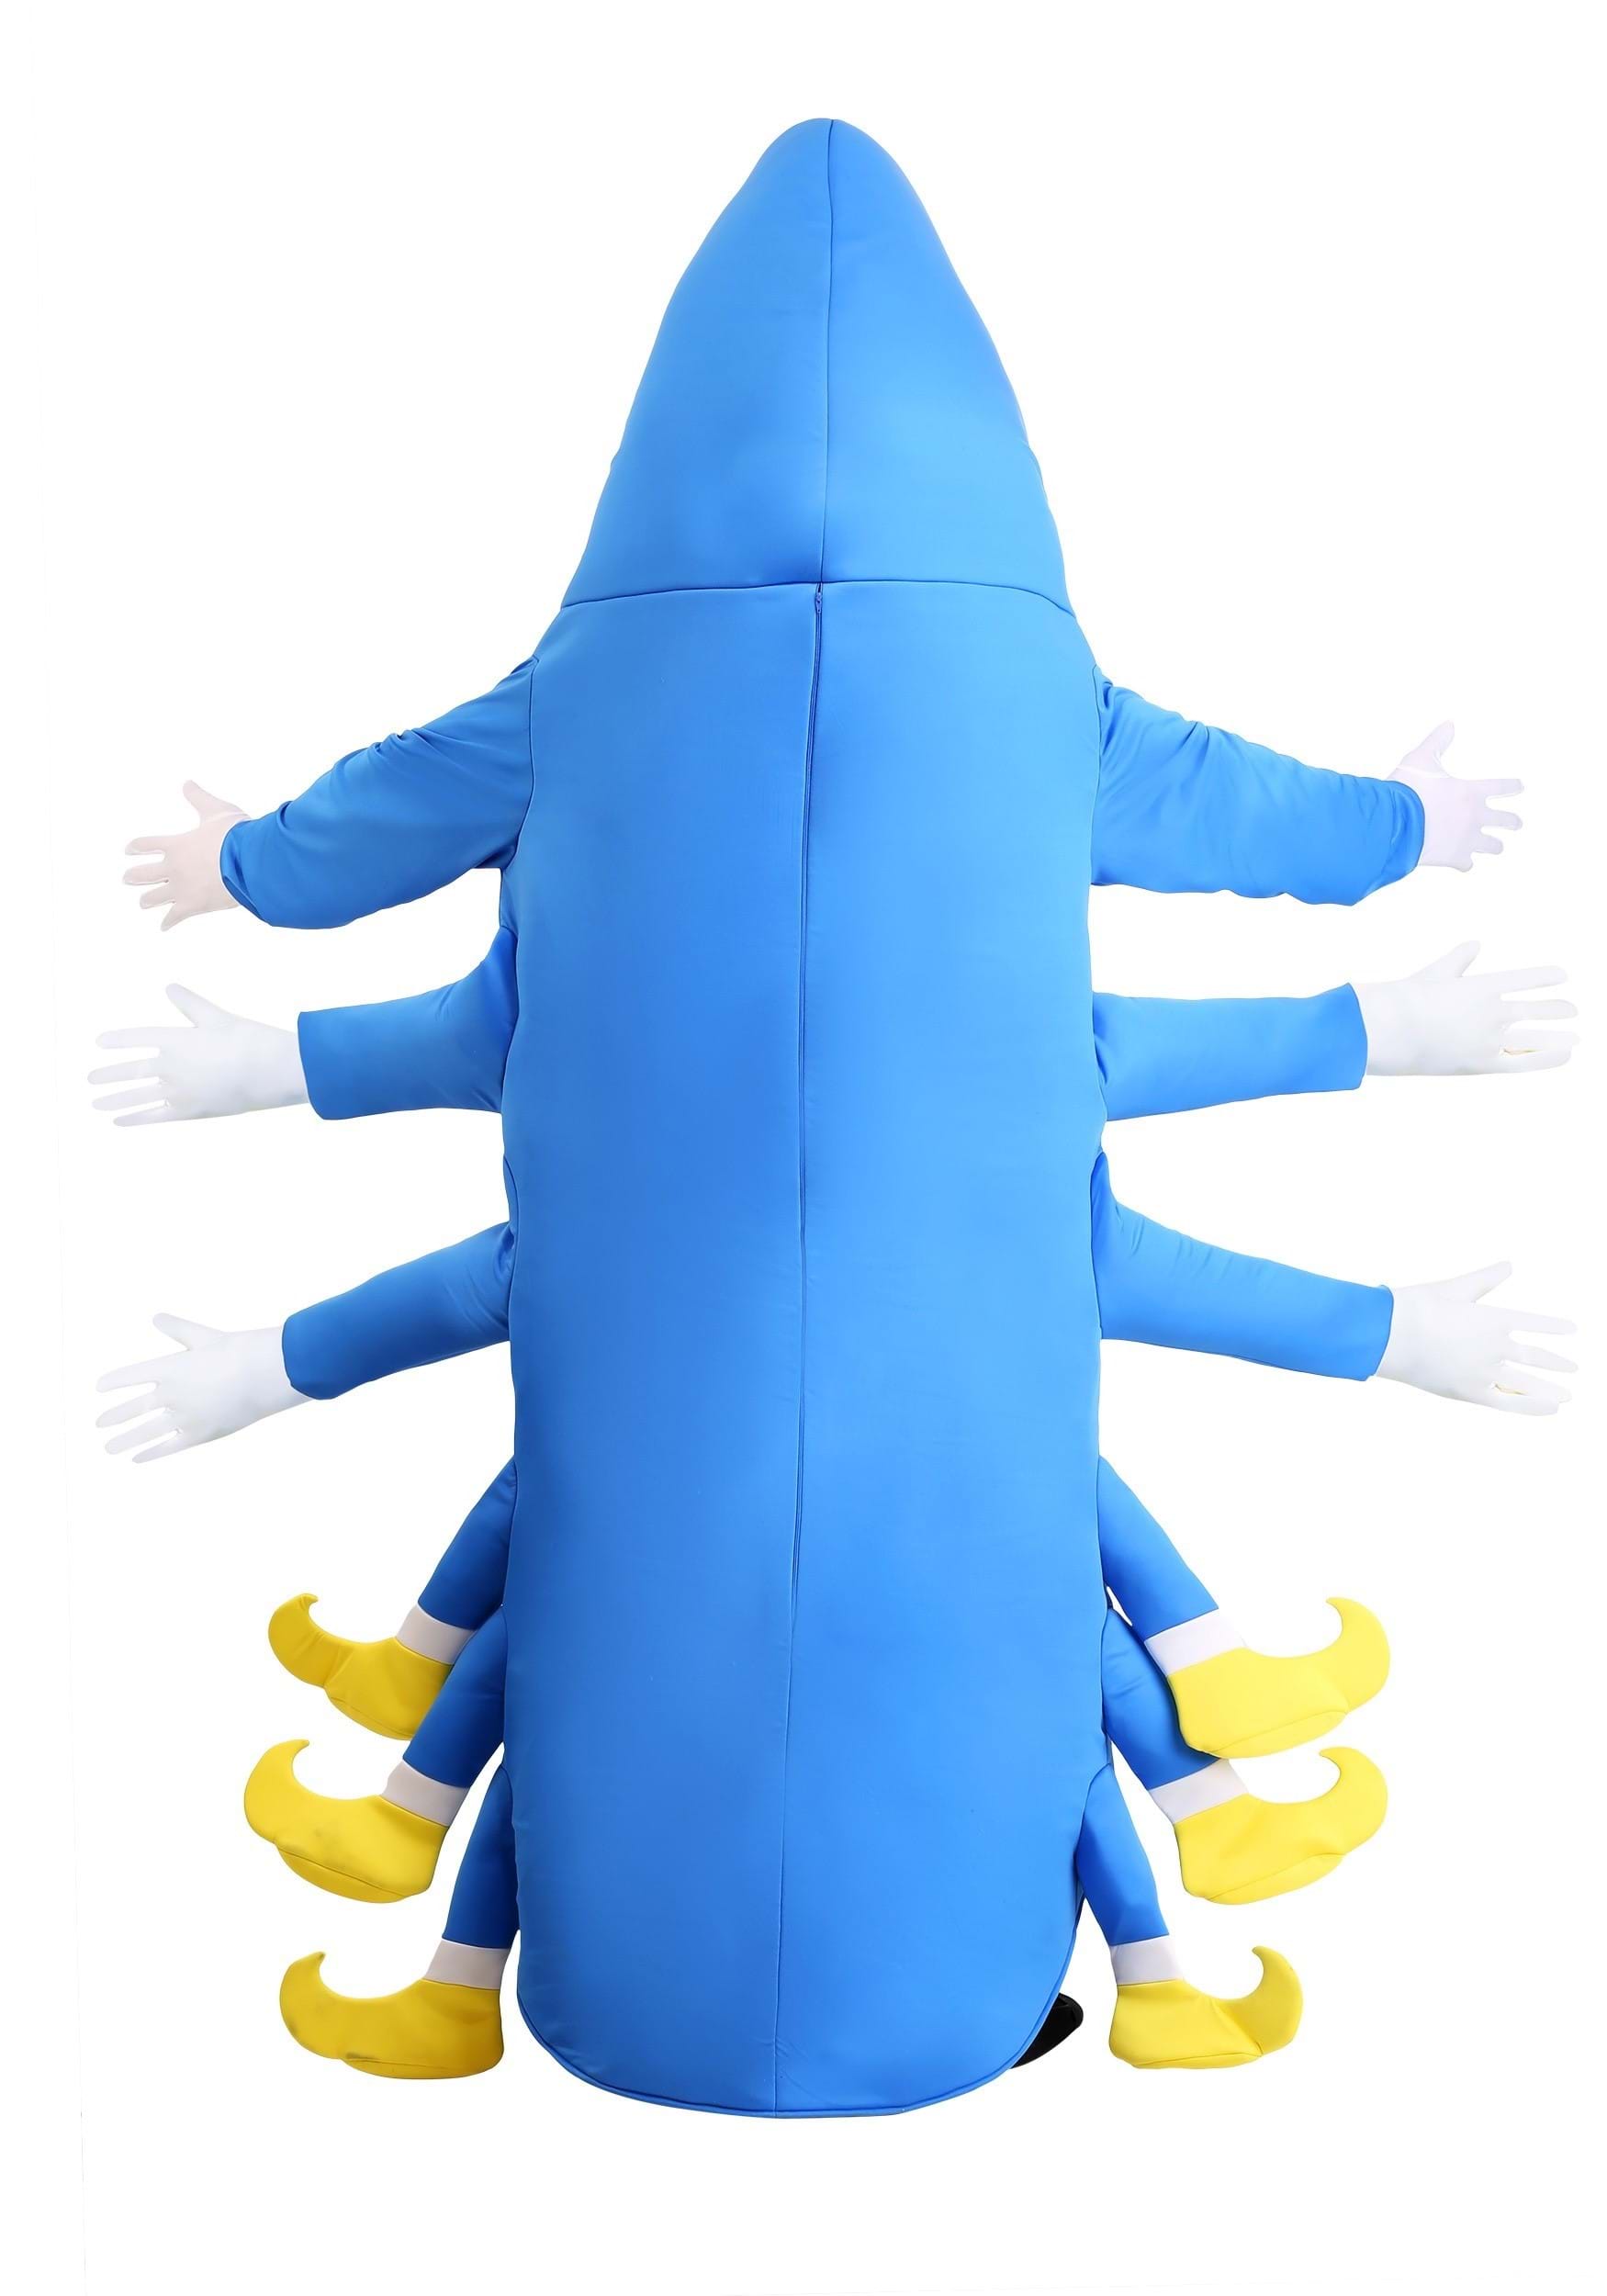 Wonderful Blue Caterpillar Adult Costume , Alice In Wonderland Costume